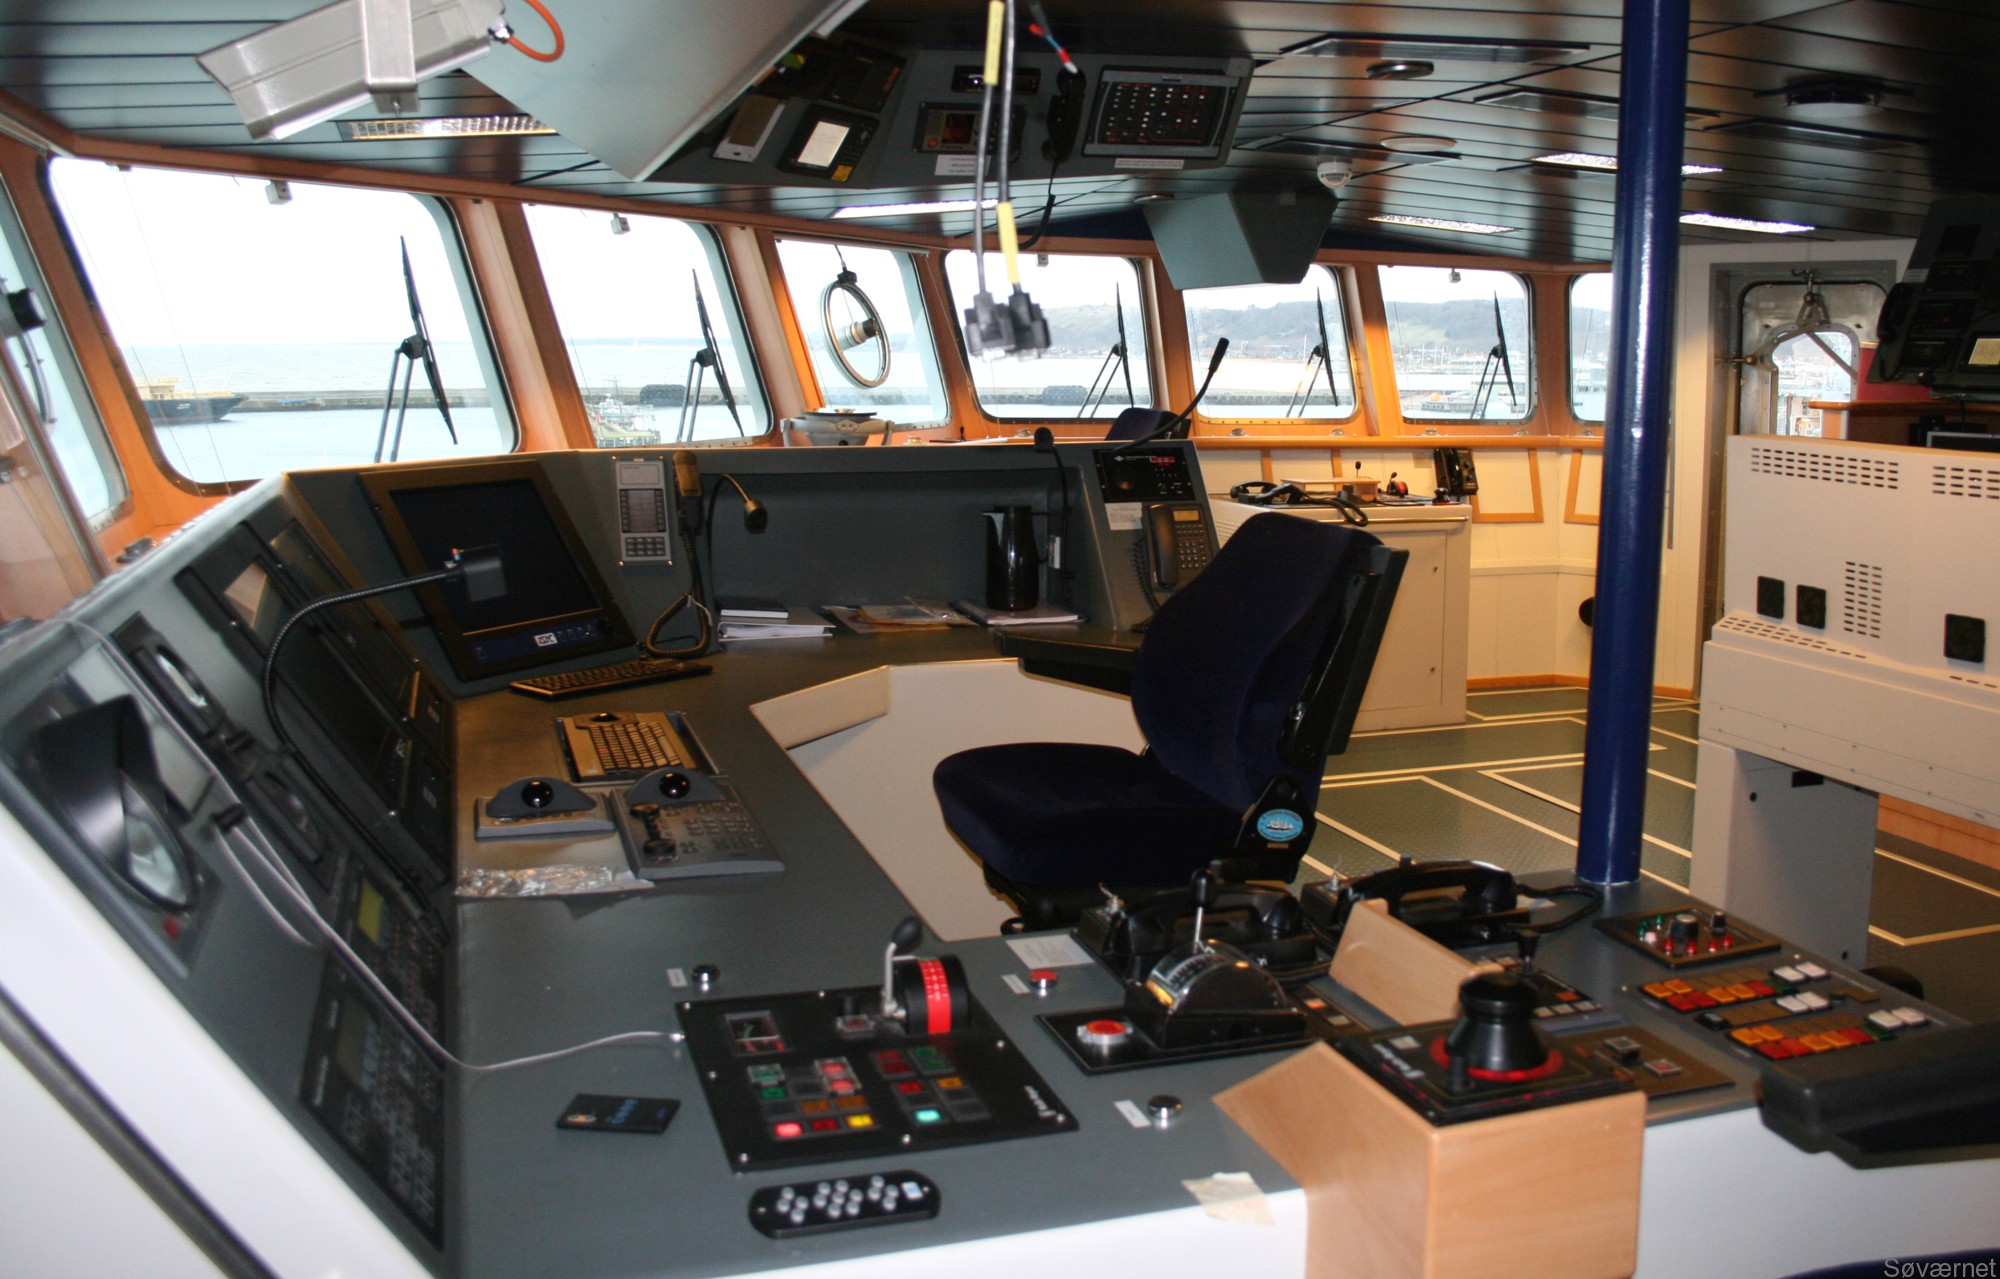 p-571 hdms ejnar mikkelsen knud rasmussen class offshore patrol vessel opv royal danish navy inspektionsfartøj 22 bridge helm